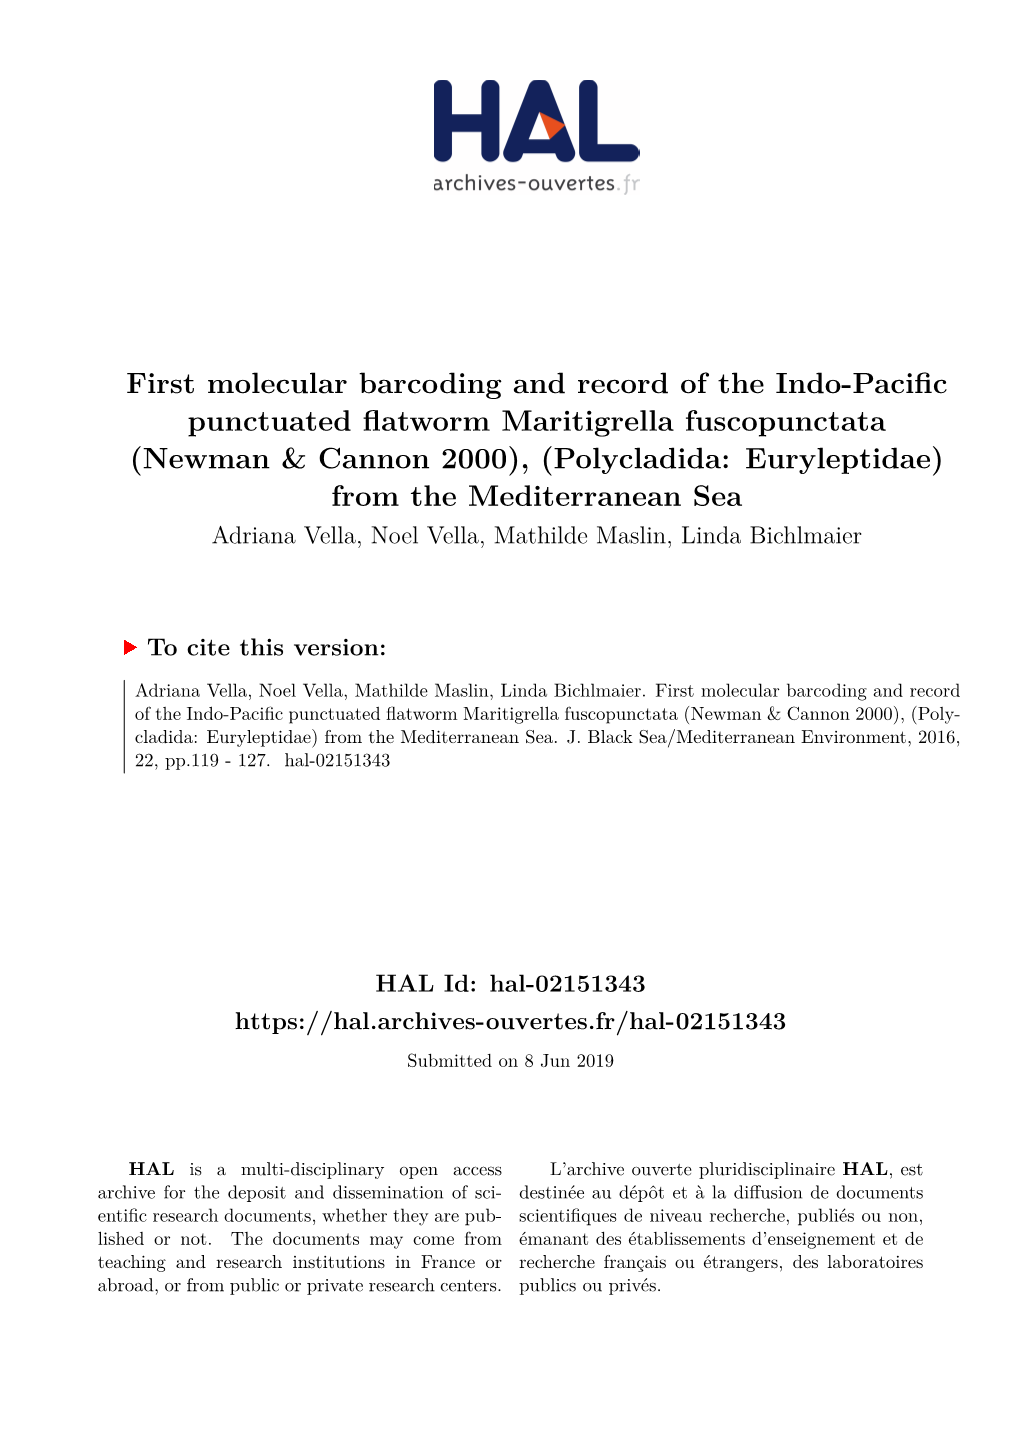 First Molecular Barcoding and Record of the Indo-Pacific Punctuated Flatworm Maritigrella Fuscopunctata